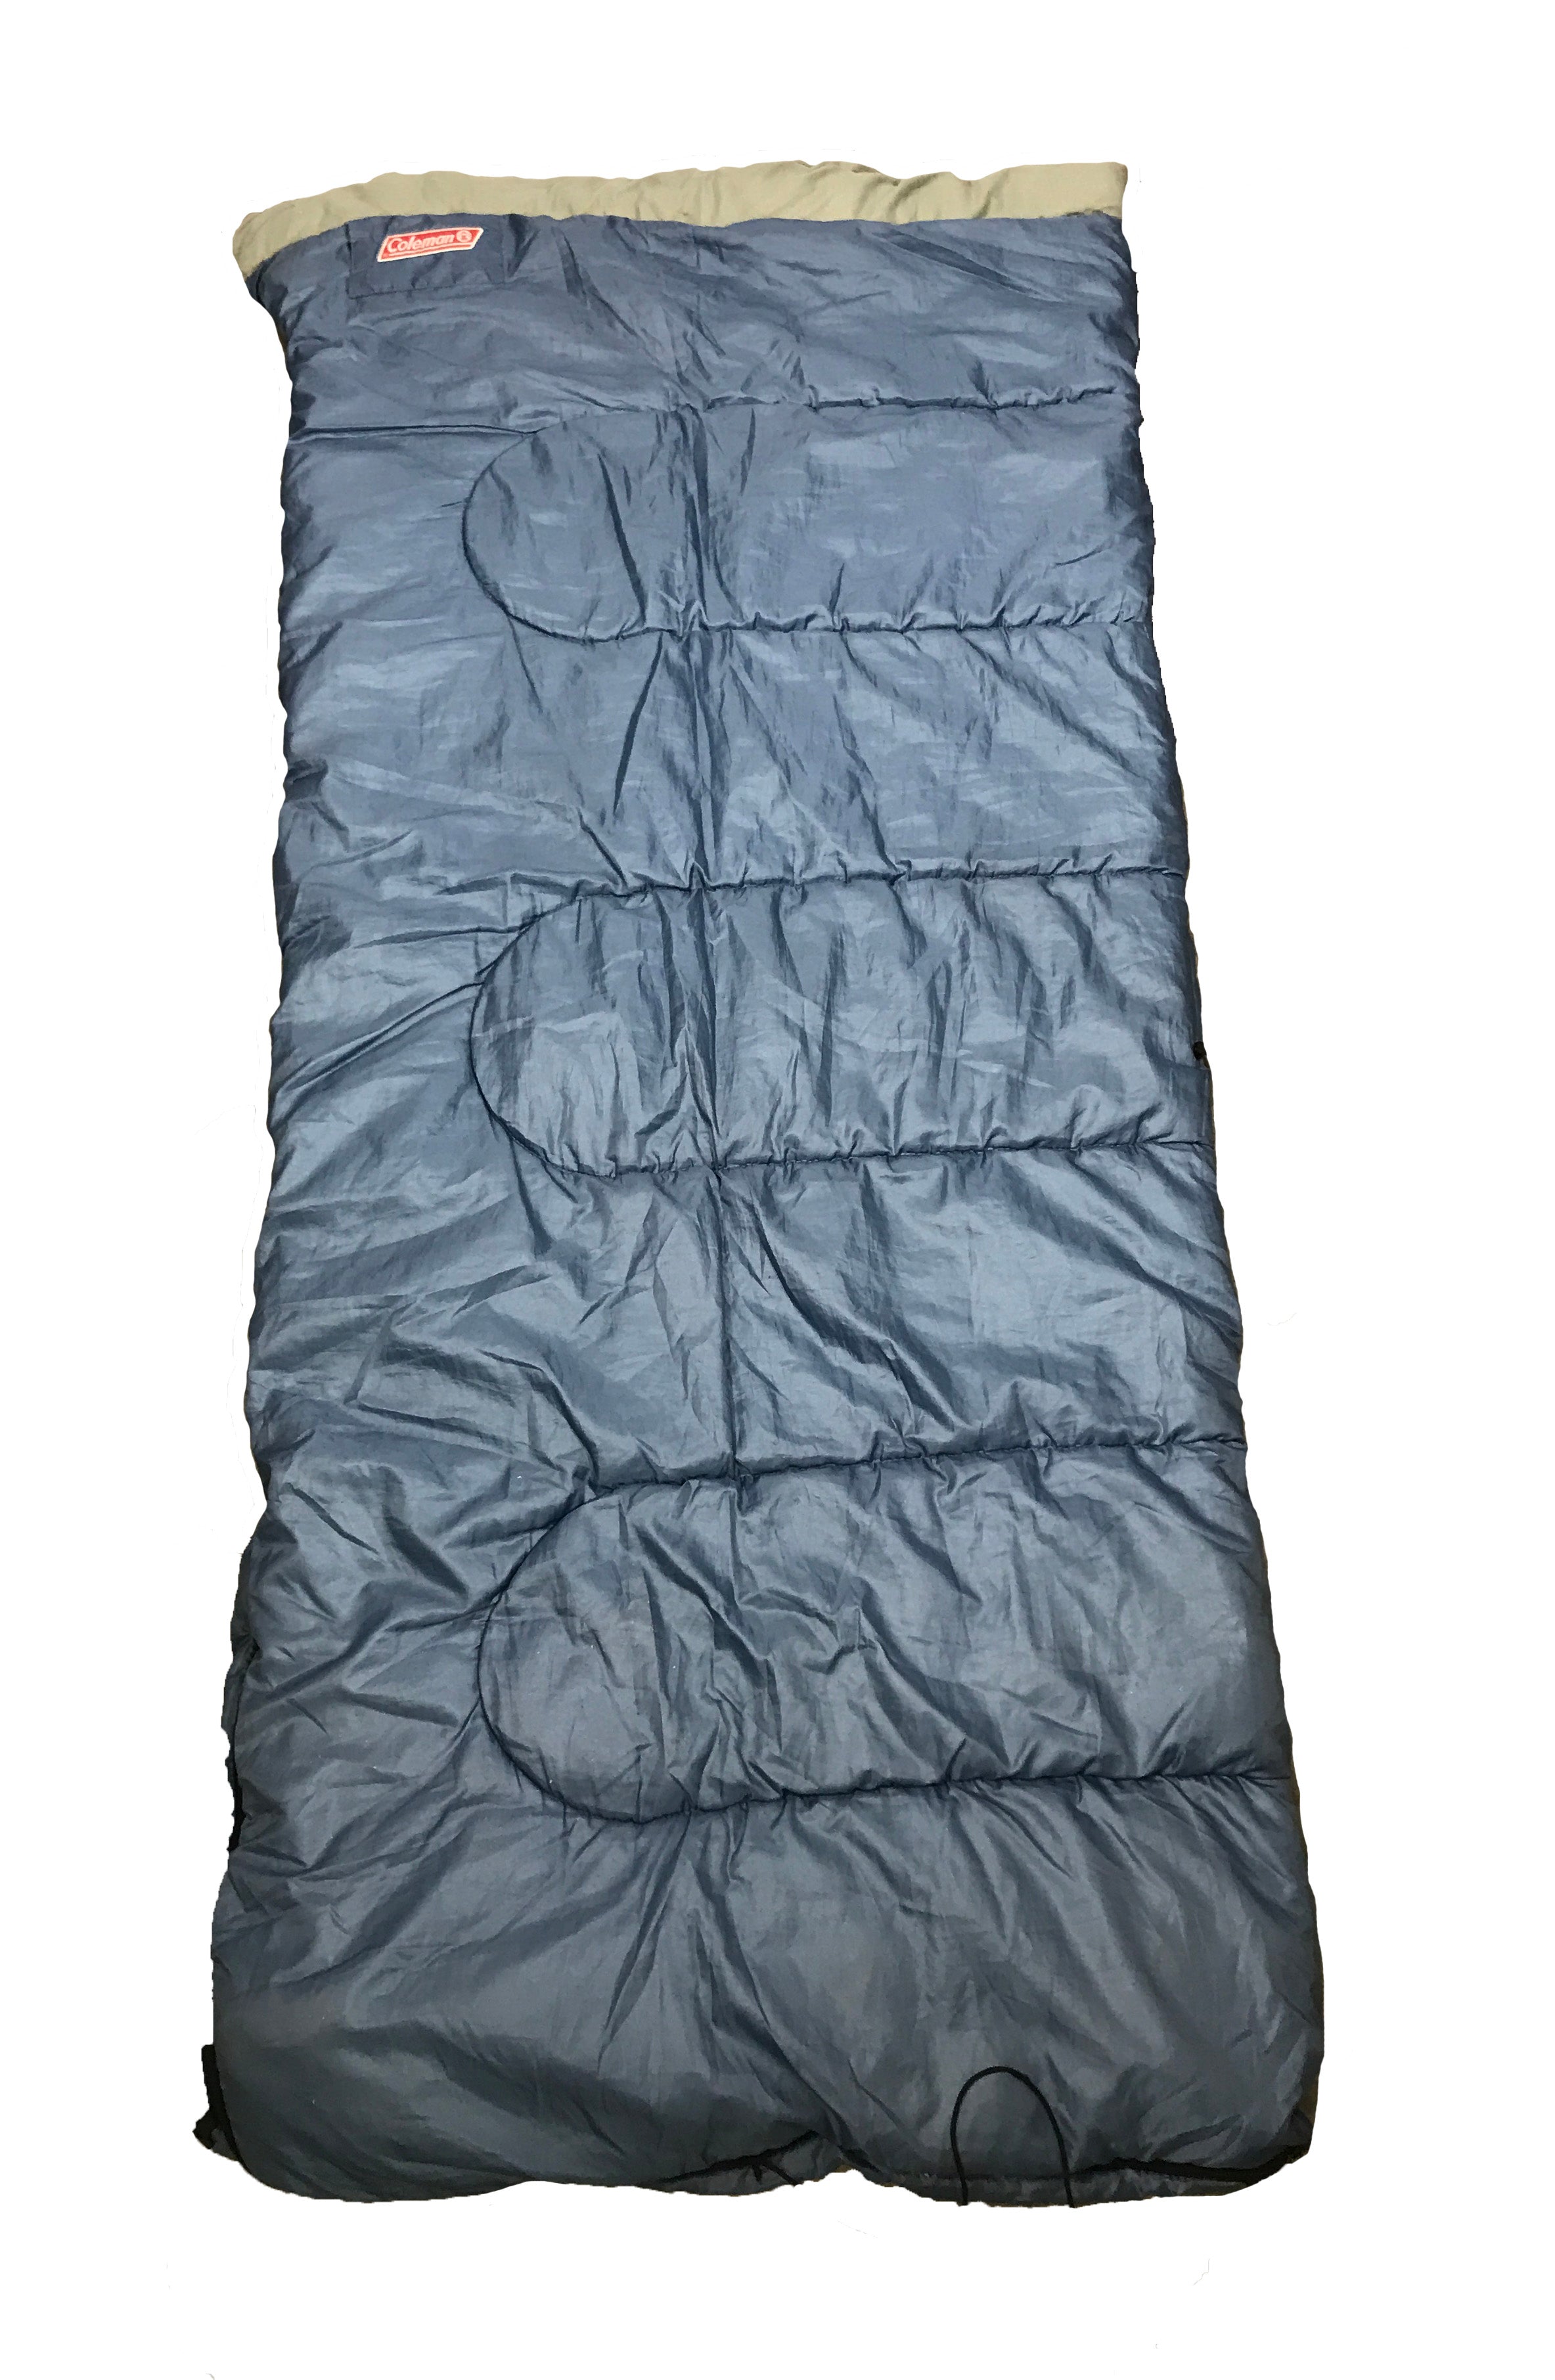 Coleman Blue Sleeping Bag Size 6ft x 30"